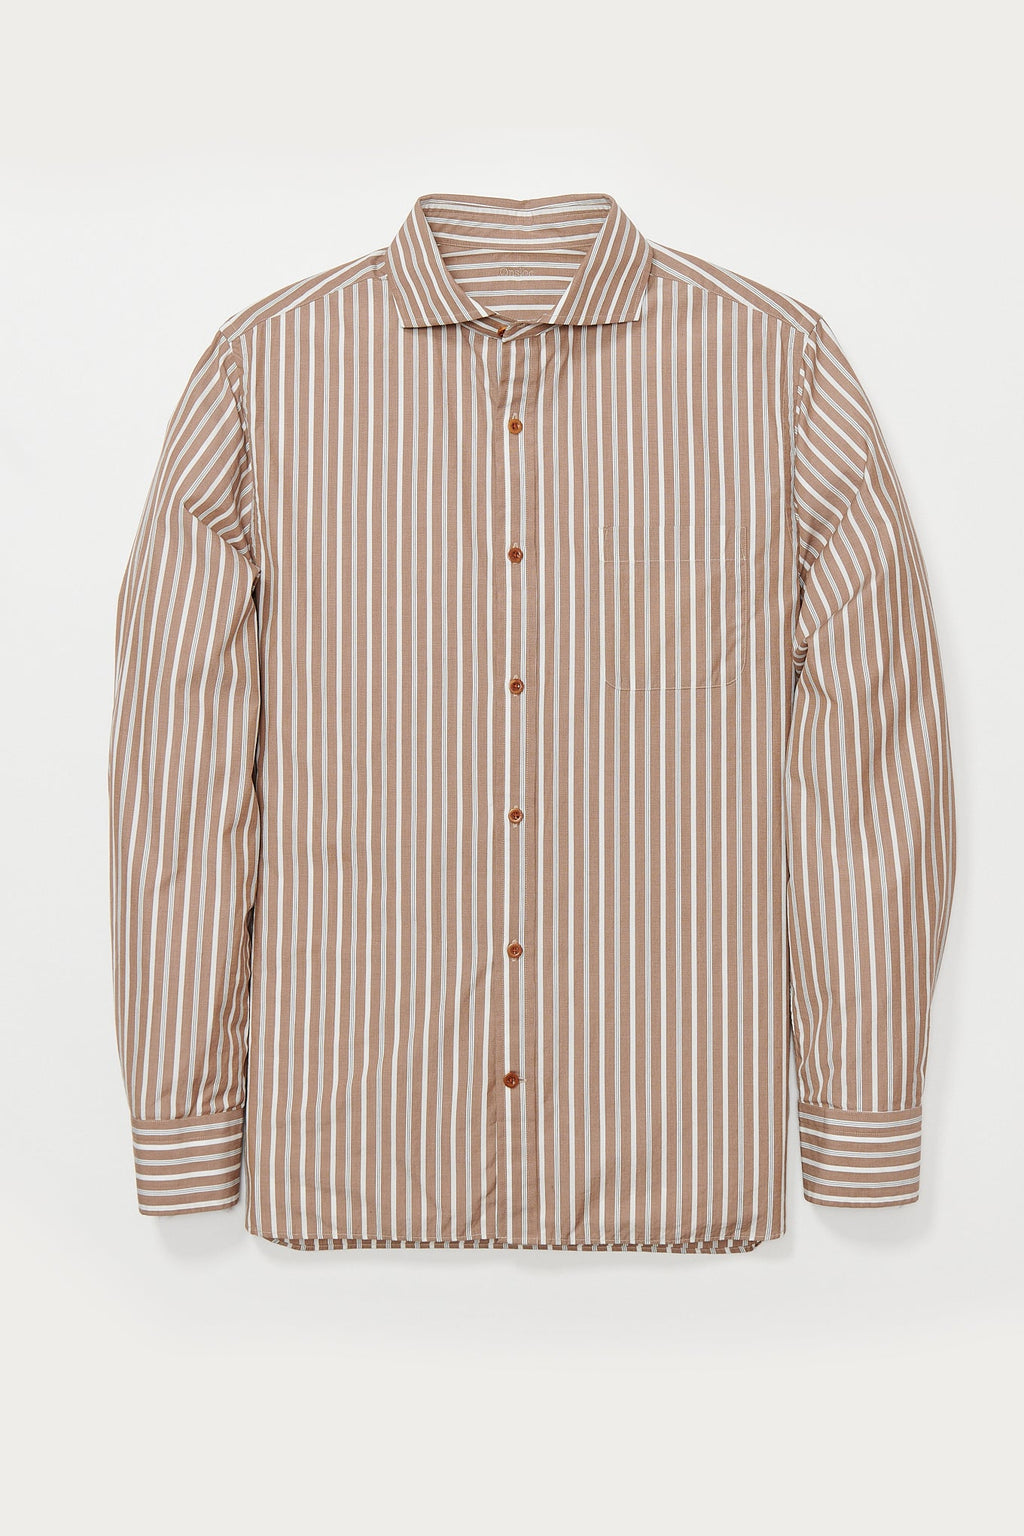 Forsyth - C100 - Men's Short Sleeve Classic Oxford Dress Shirt